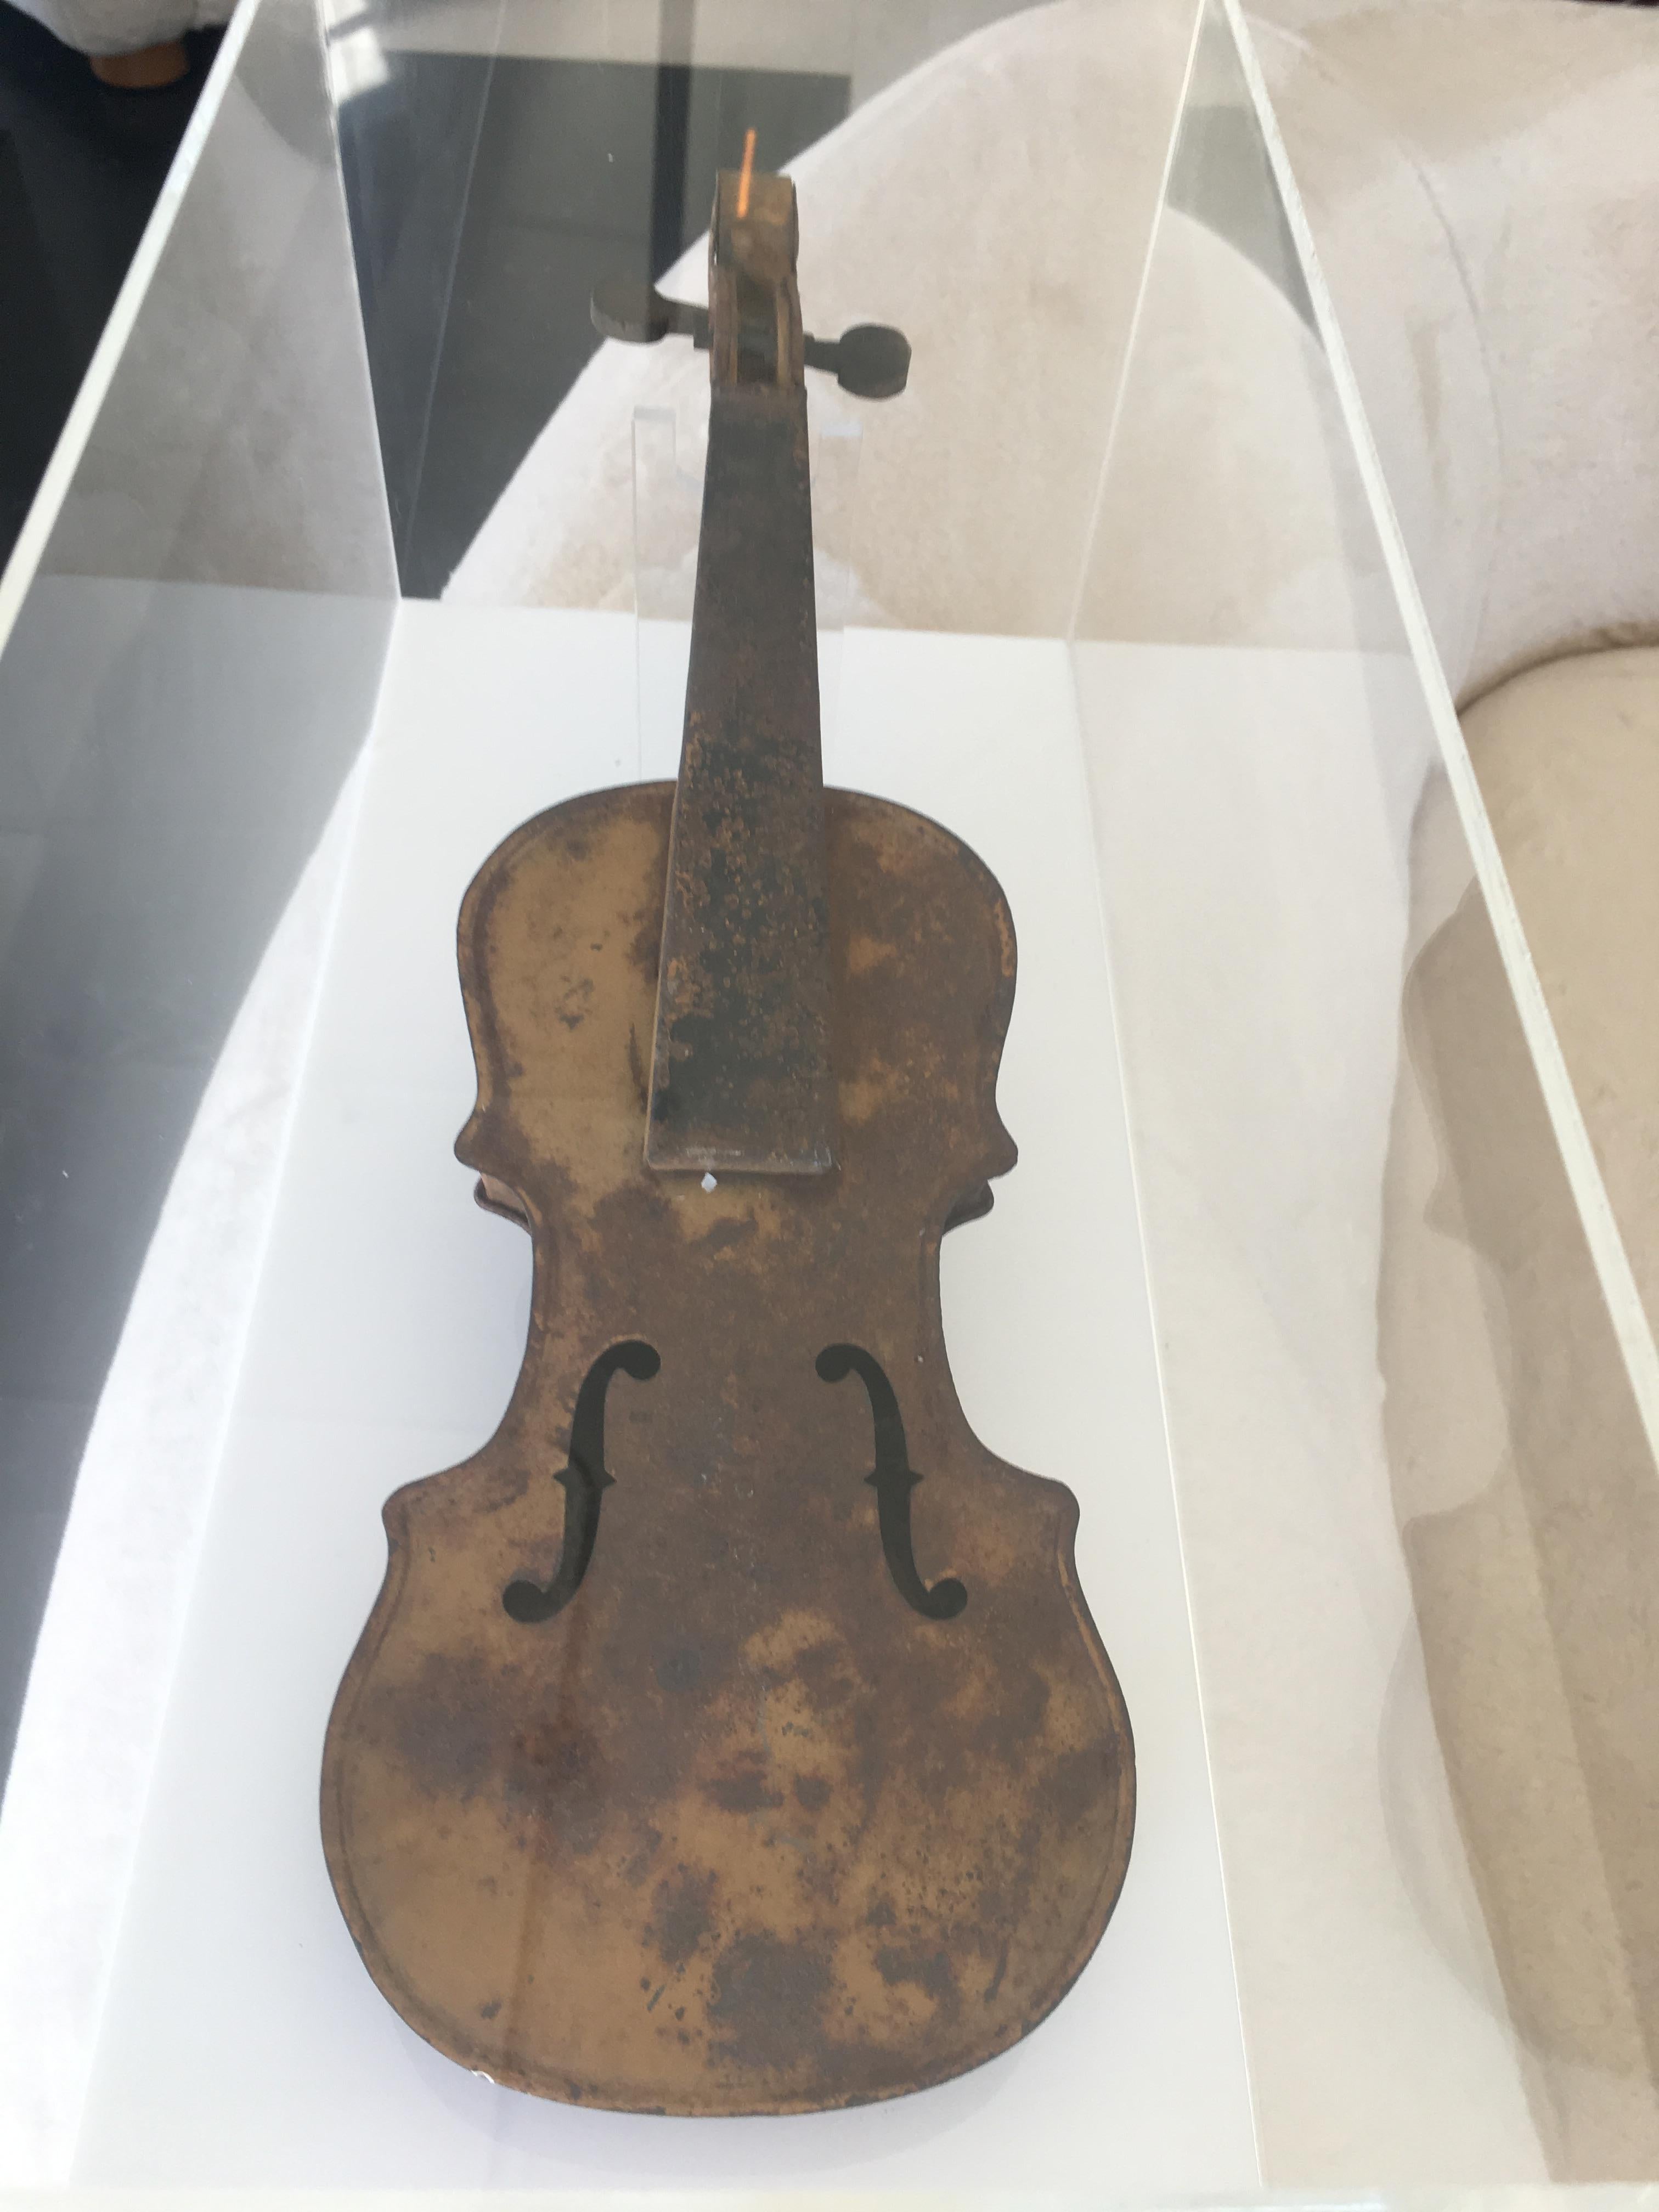 19th century rusted metal violin in plexiglass display box. Violin measures: 6